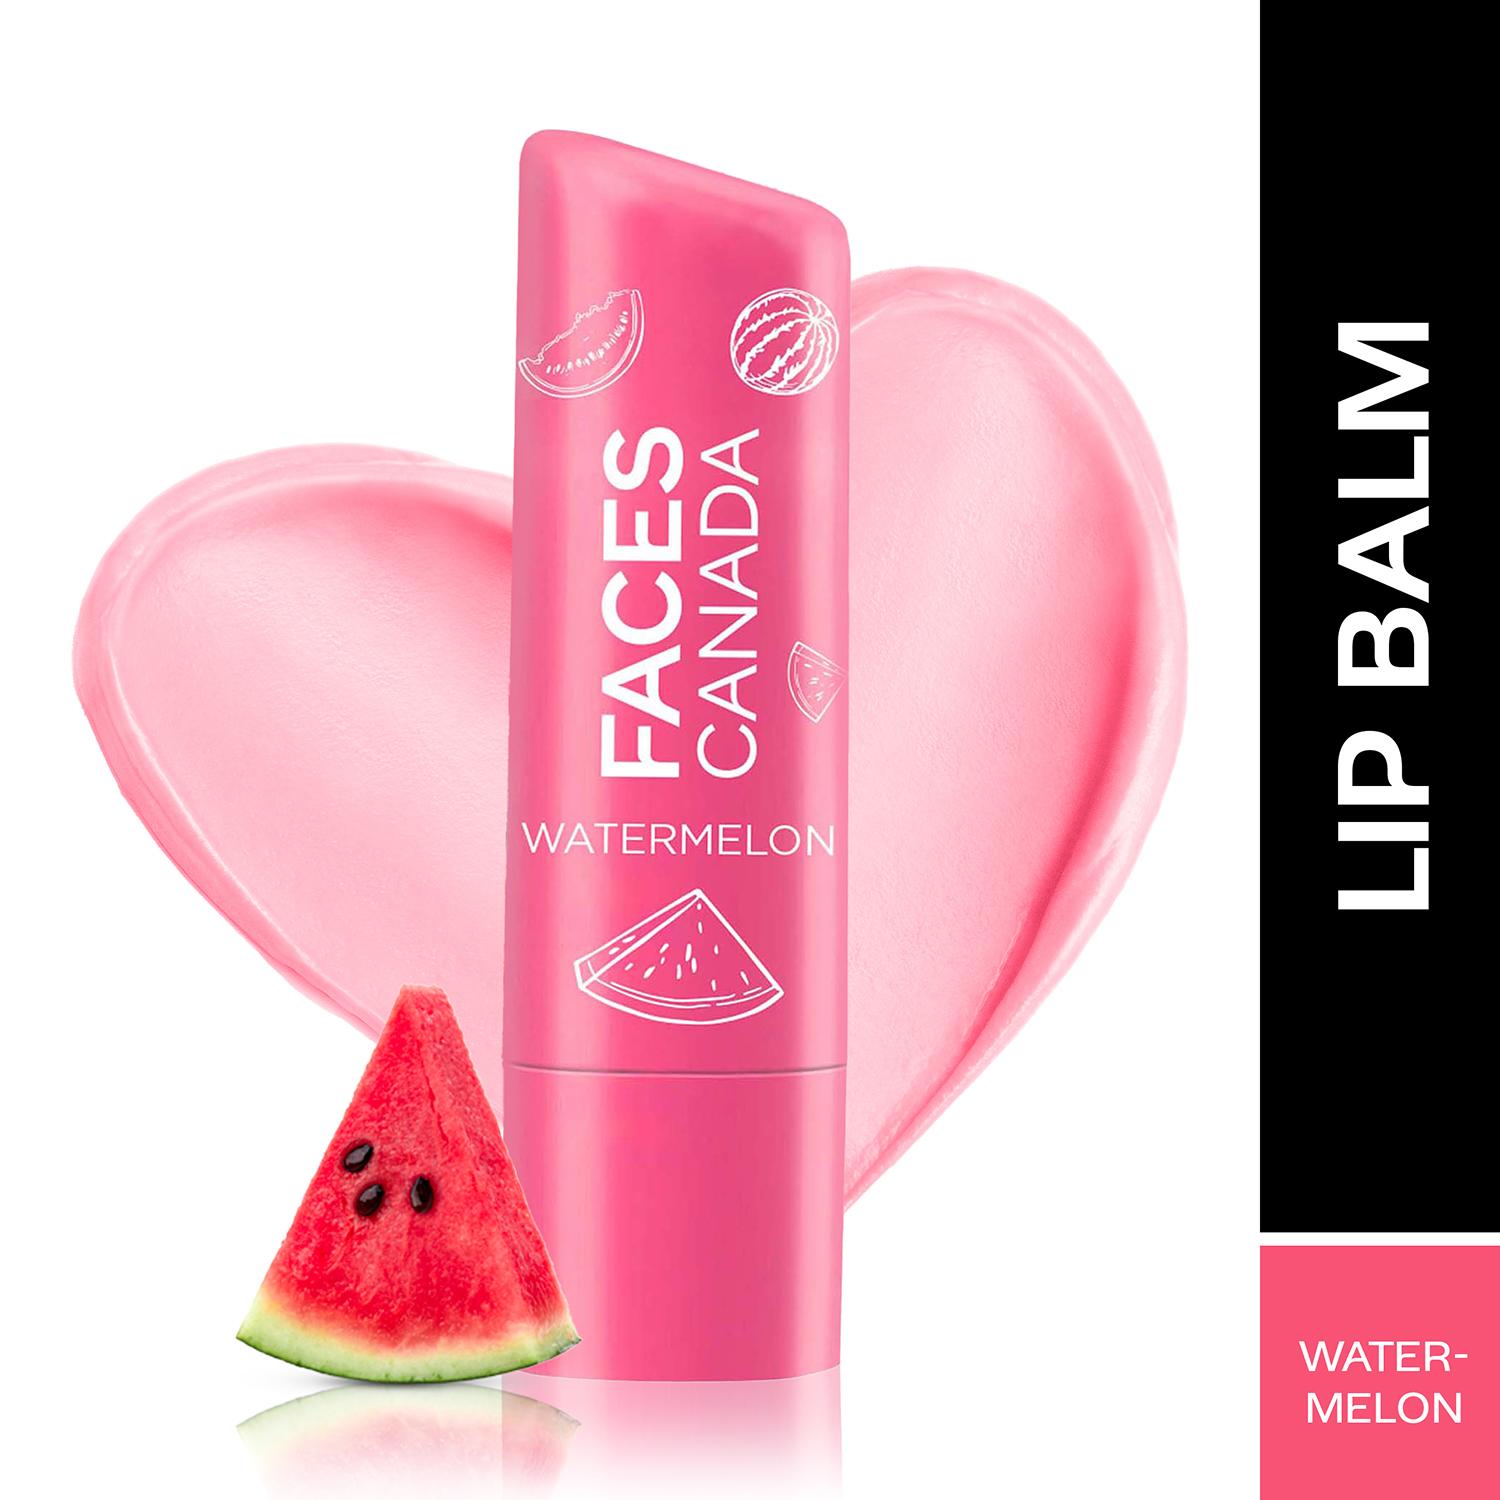 Faces Canada | Faces Canada Color Lip Balm - Watermelon 02, Pink Tint, SPF 15, 12 HR Moisturization (4.5 g)